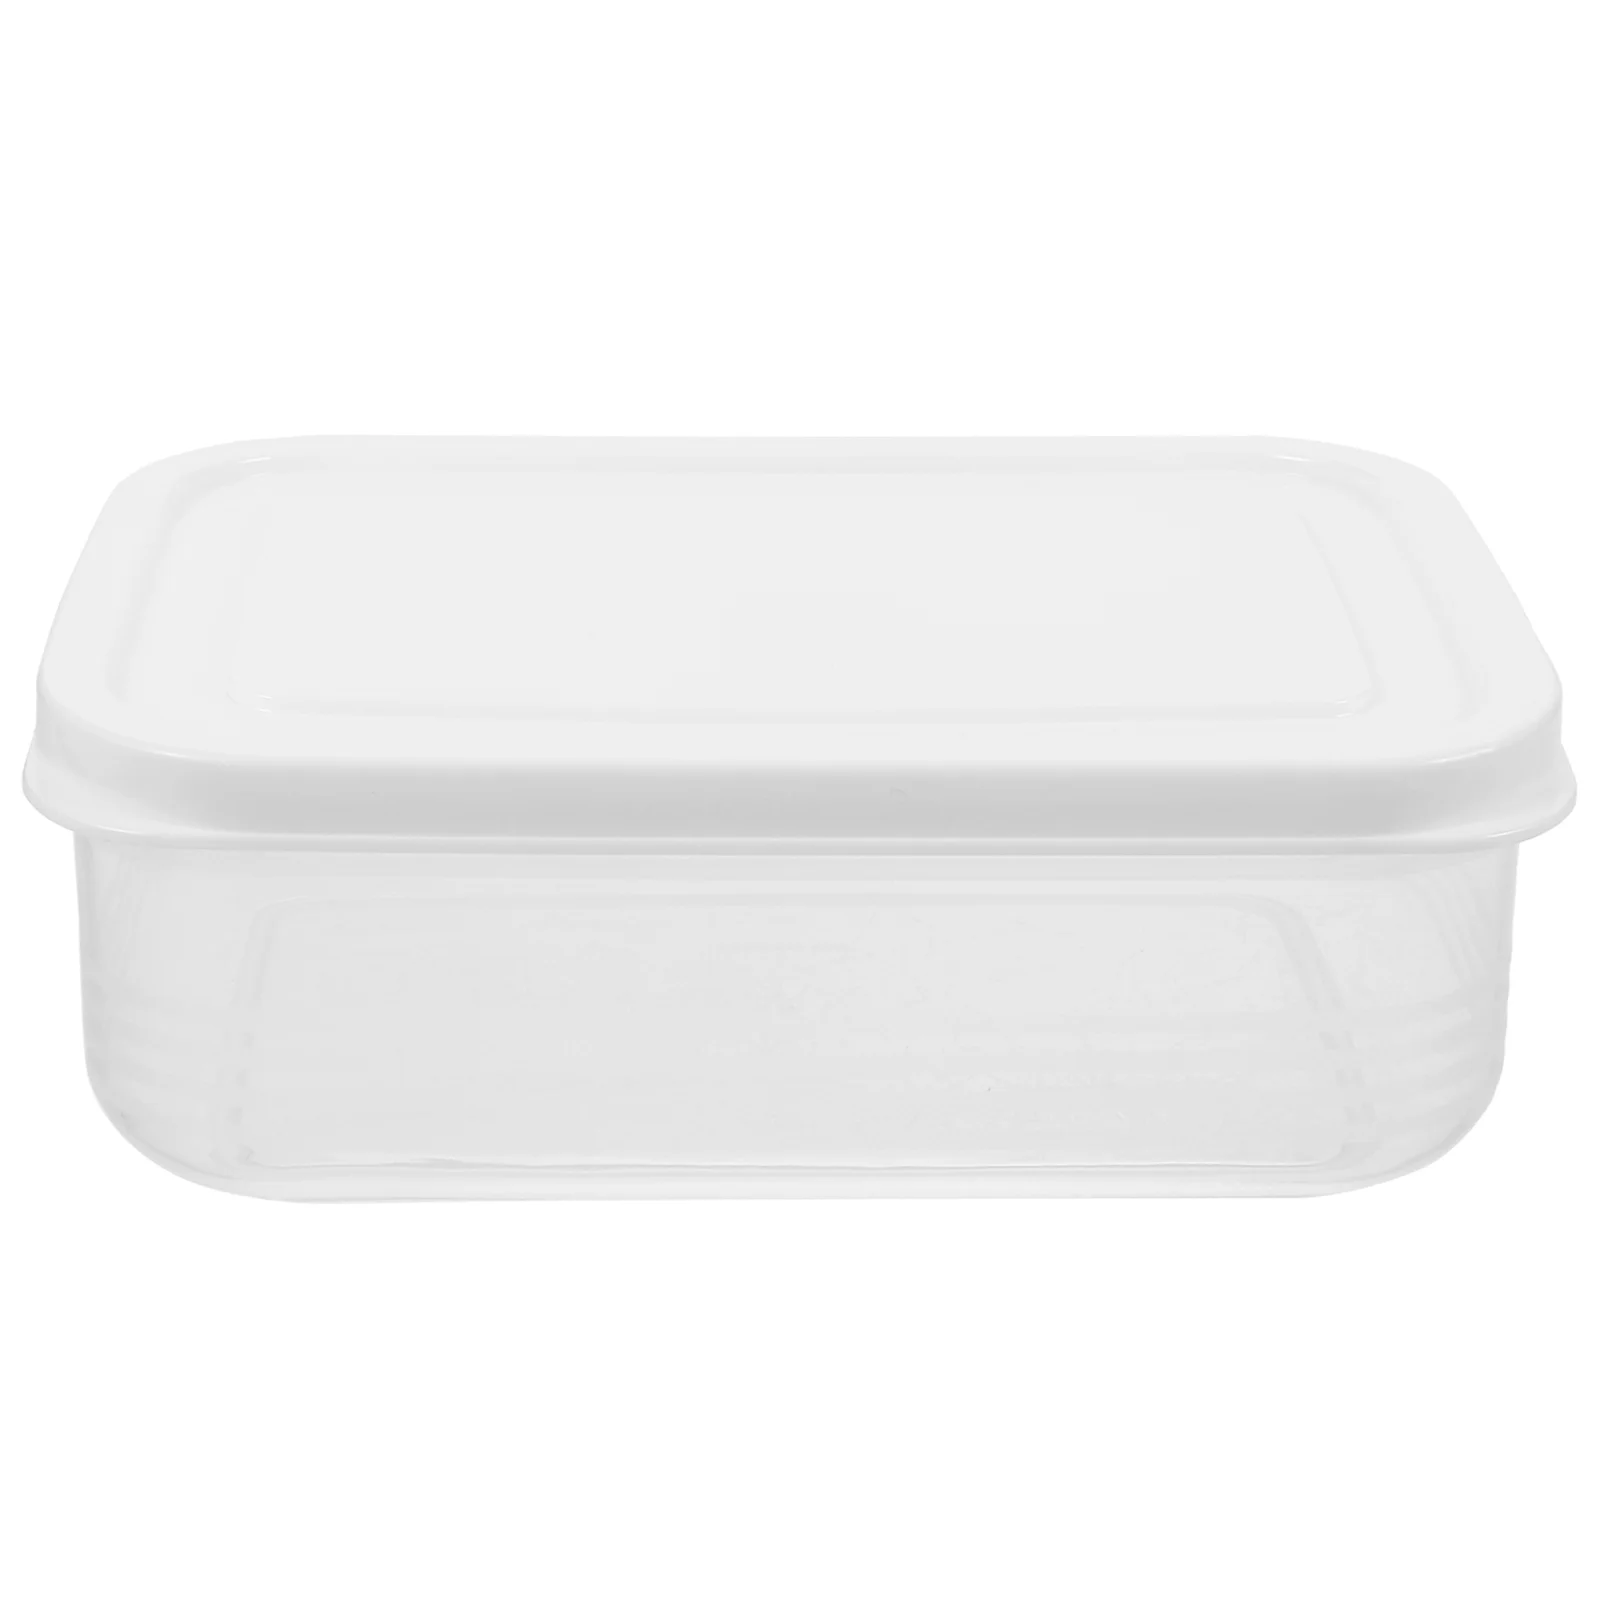 

Refrigerator Storage Box Containers Fridge Food Organizer Vegetable Organizers Lids Bins